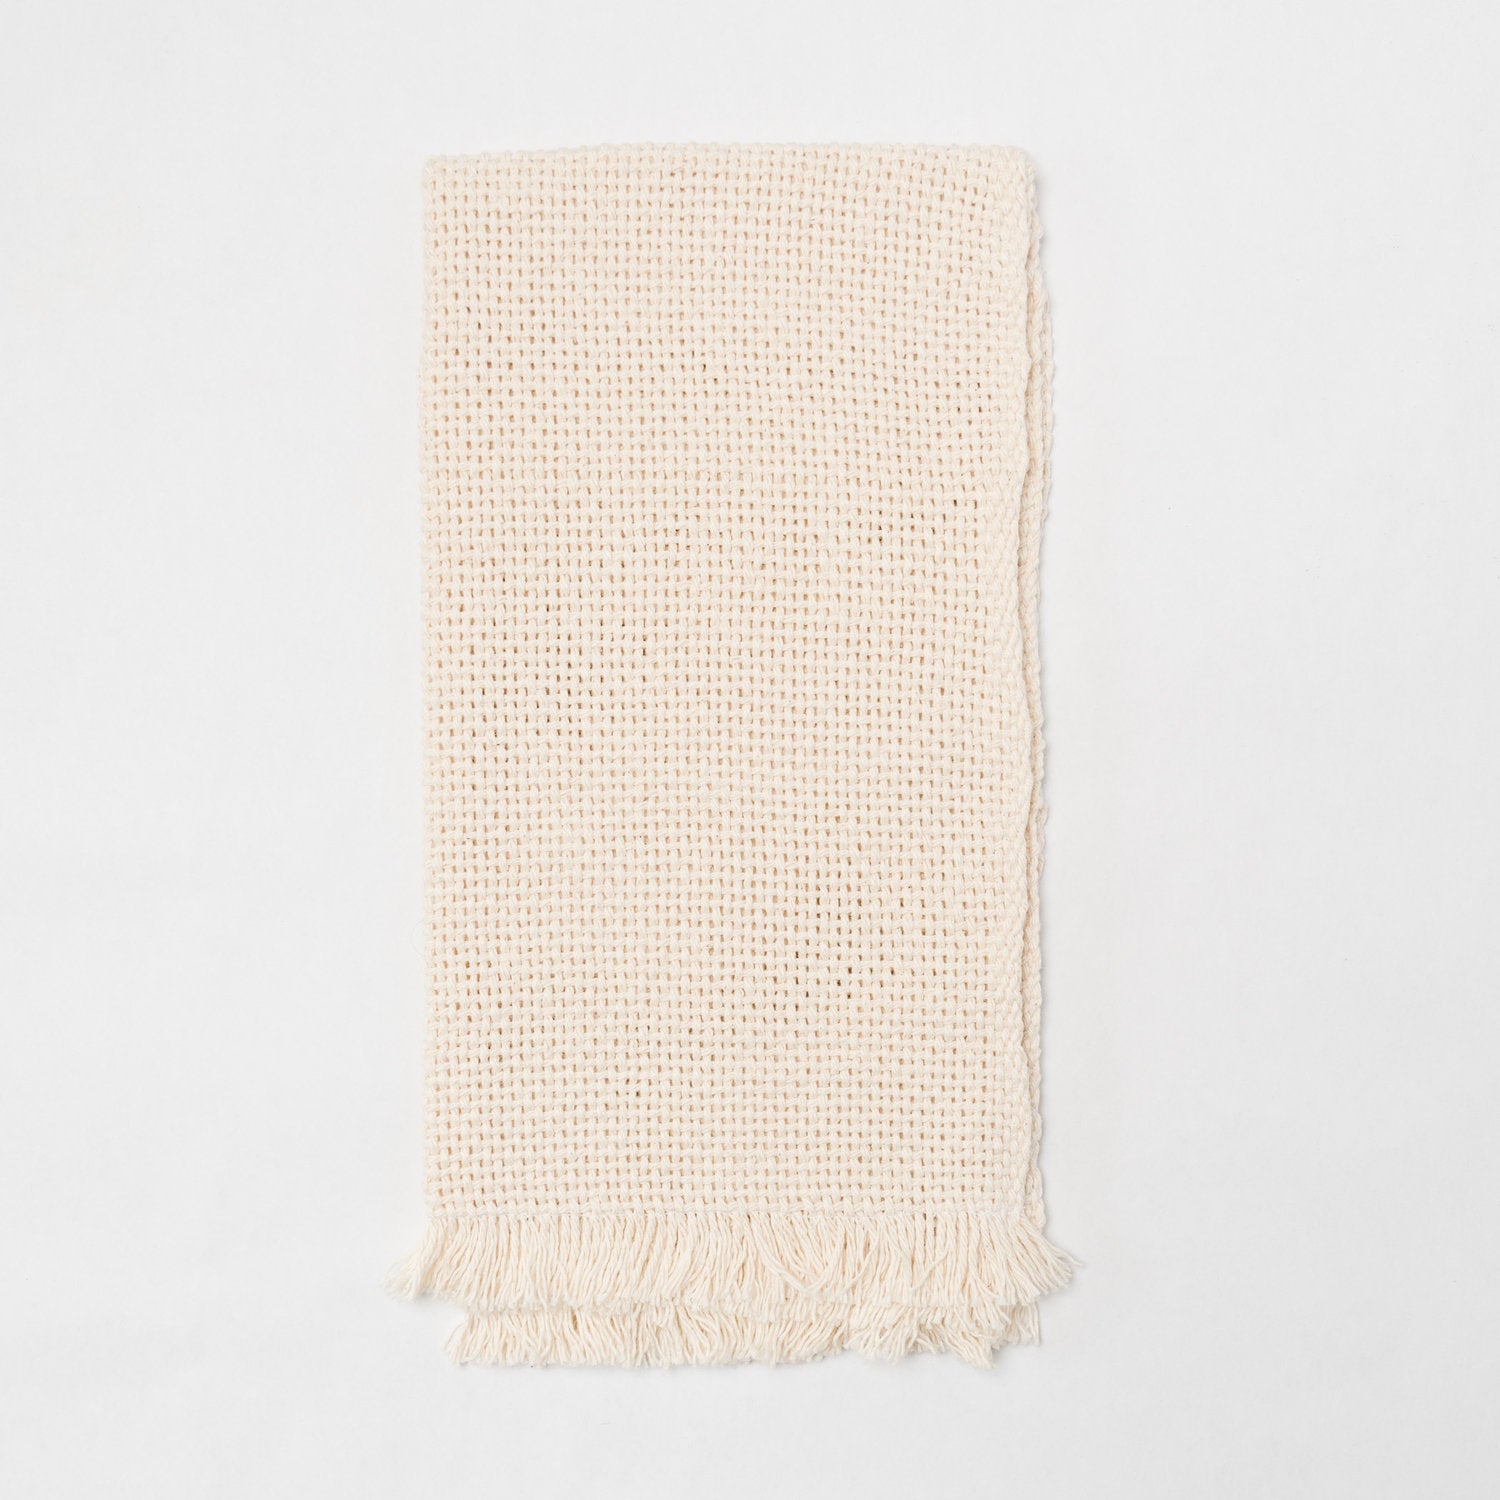 KD Weave Cream Hand Towel, Set of 2